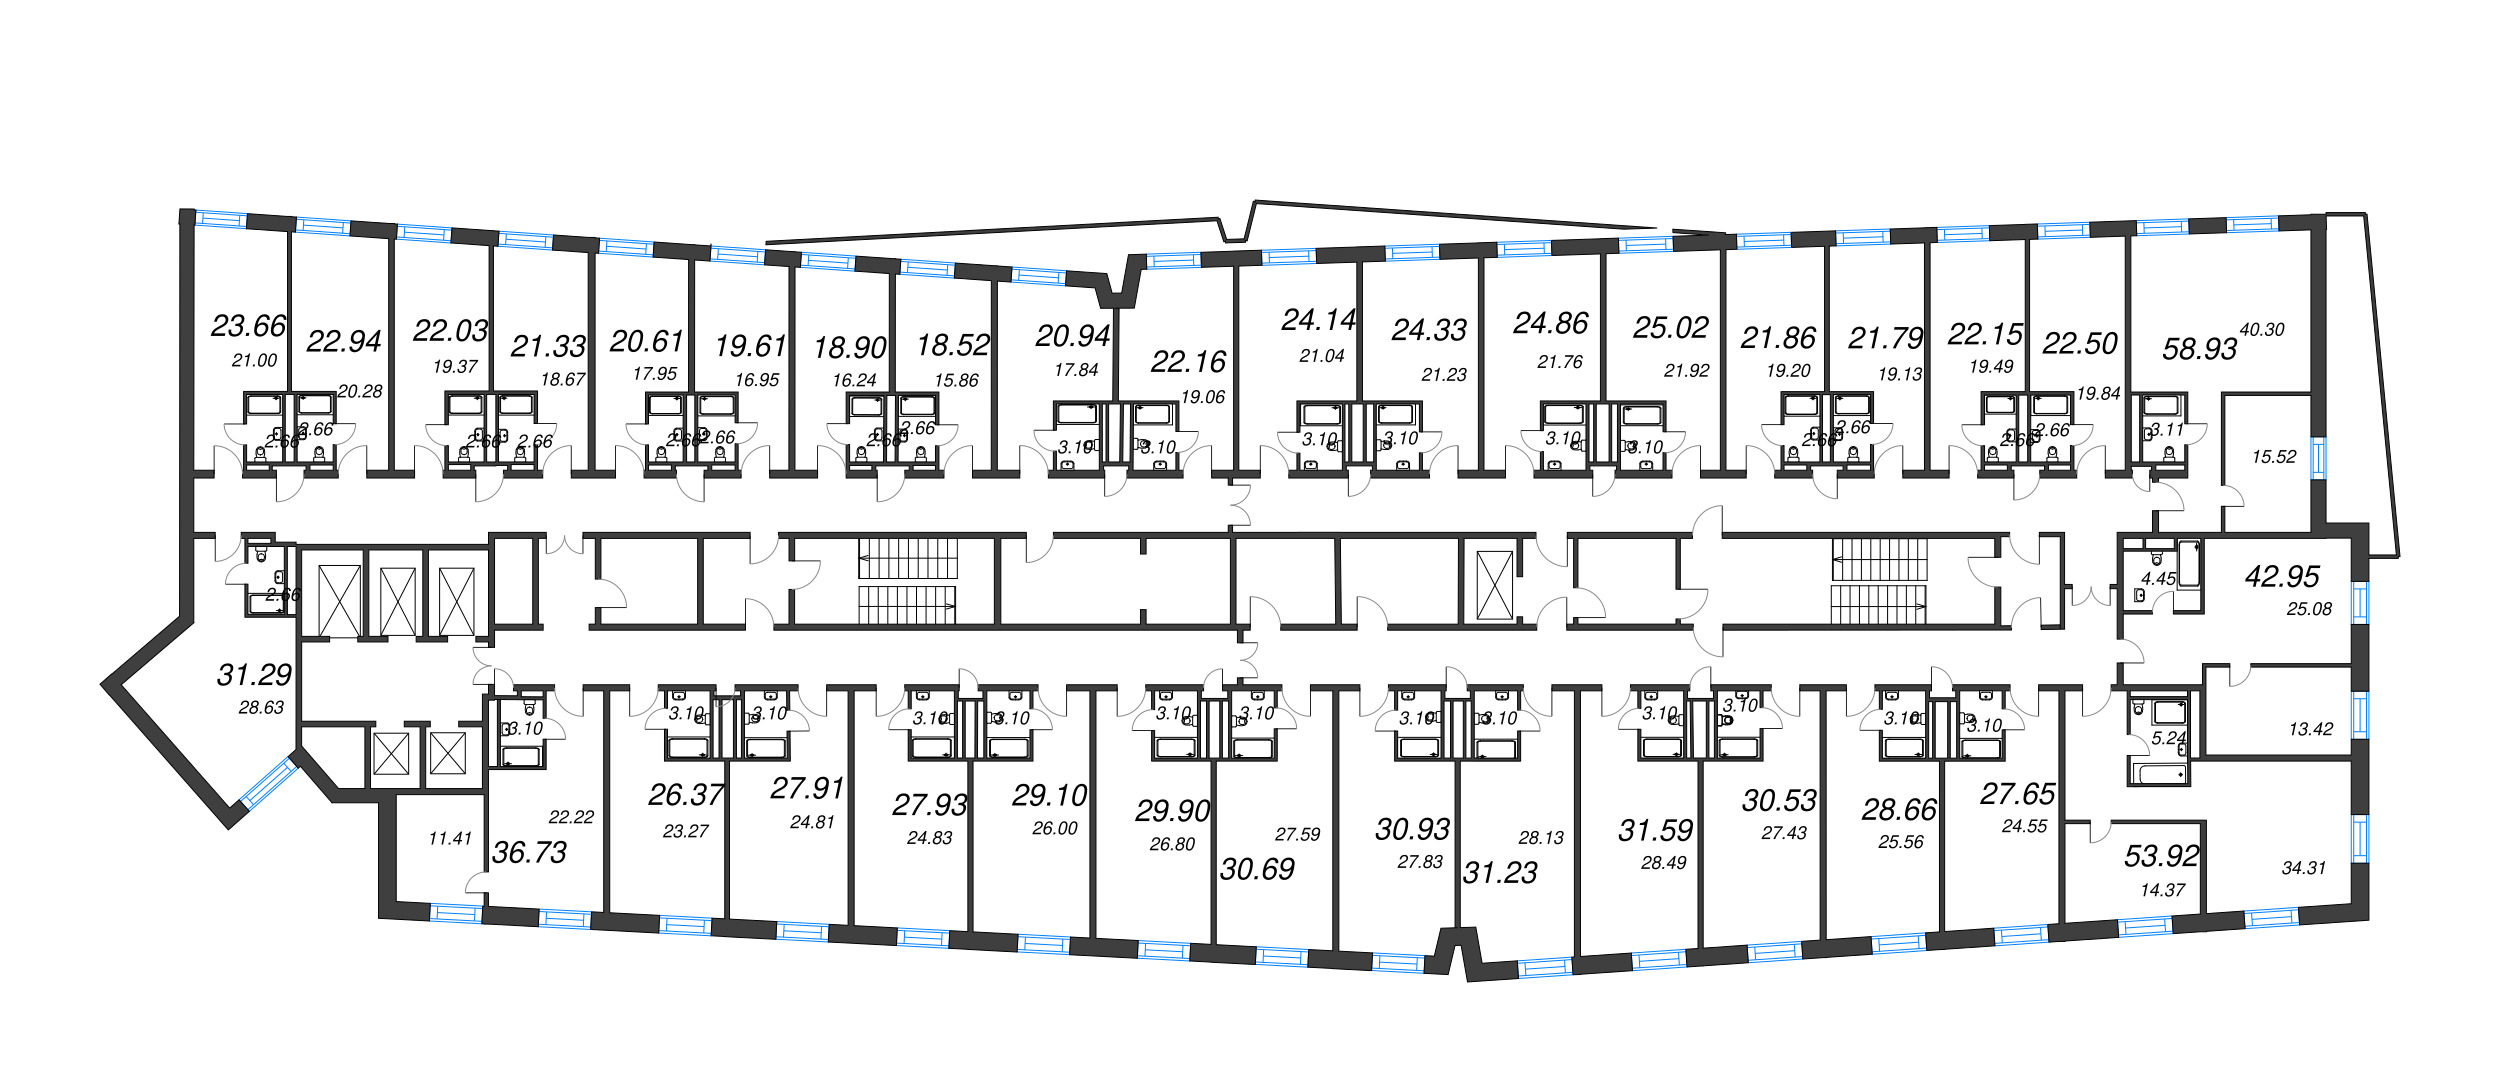 2-комнатная (Евро) квартира, 53.92 м² - планировка этажа